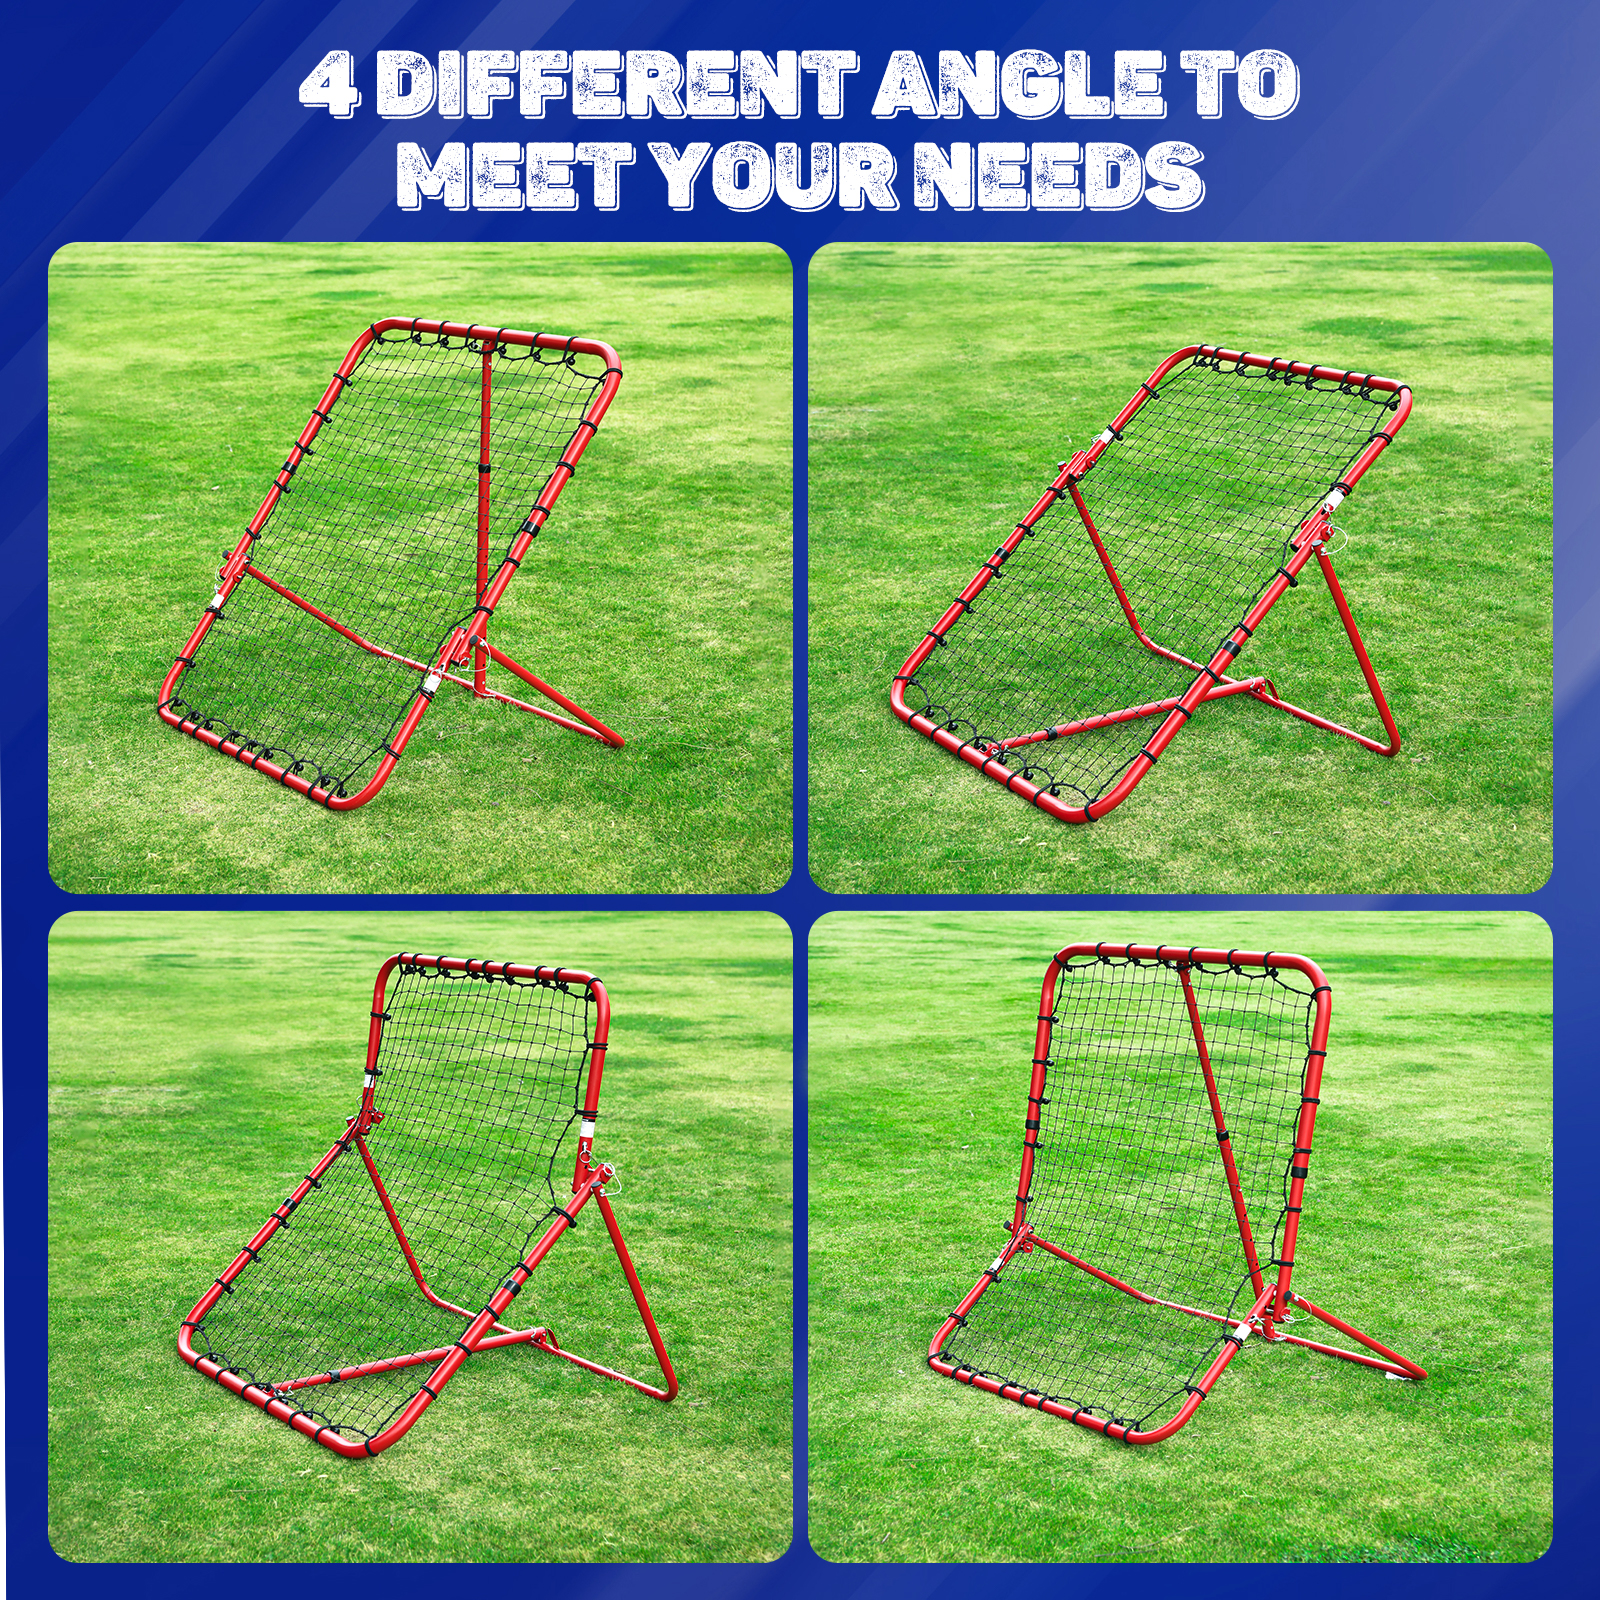 Patiassy Baseball Rebounder Net with Adjustable Angles, Heavy Duty